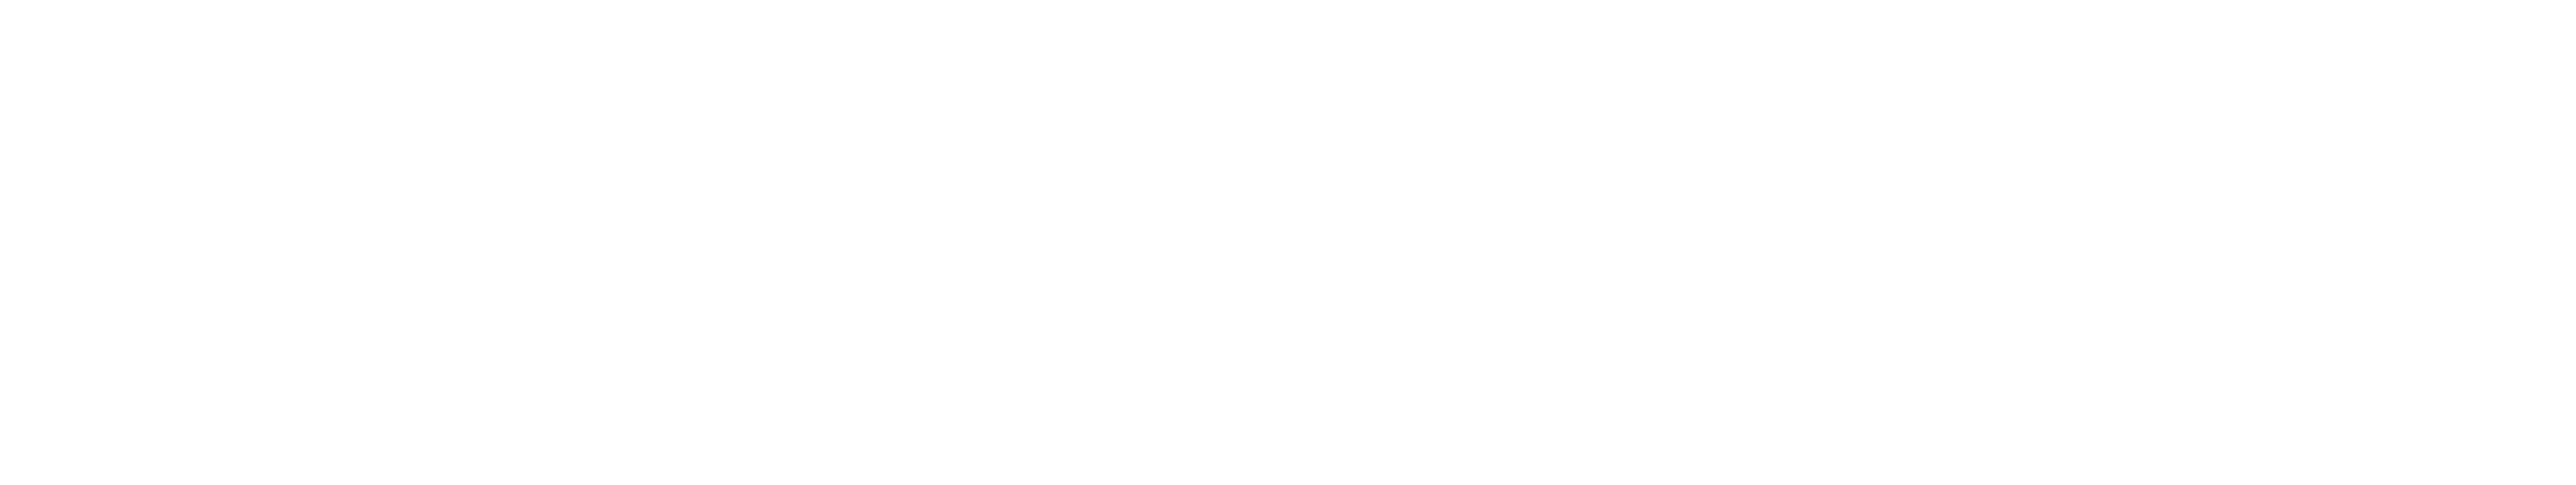 The Murphy Law Office PC, Shane D. Murphy